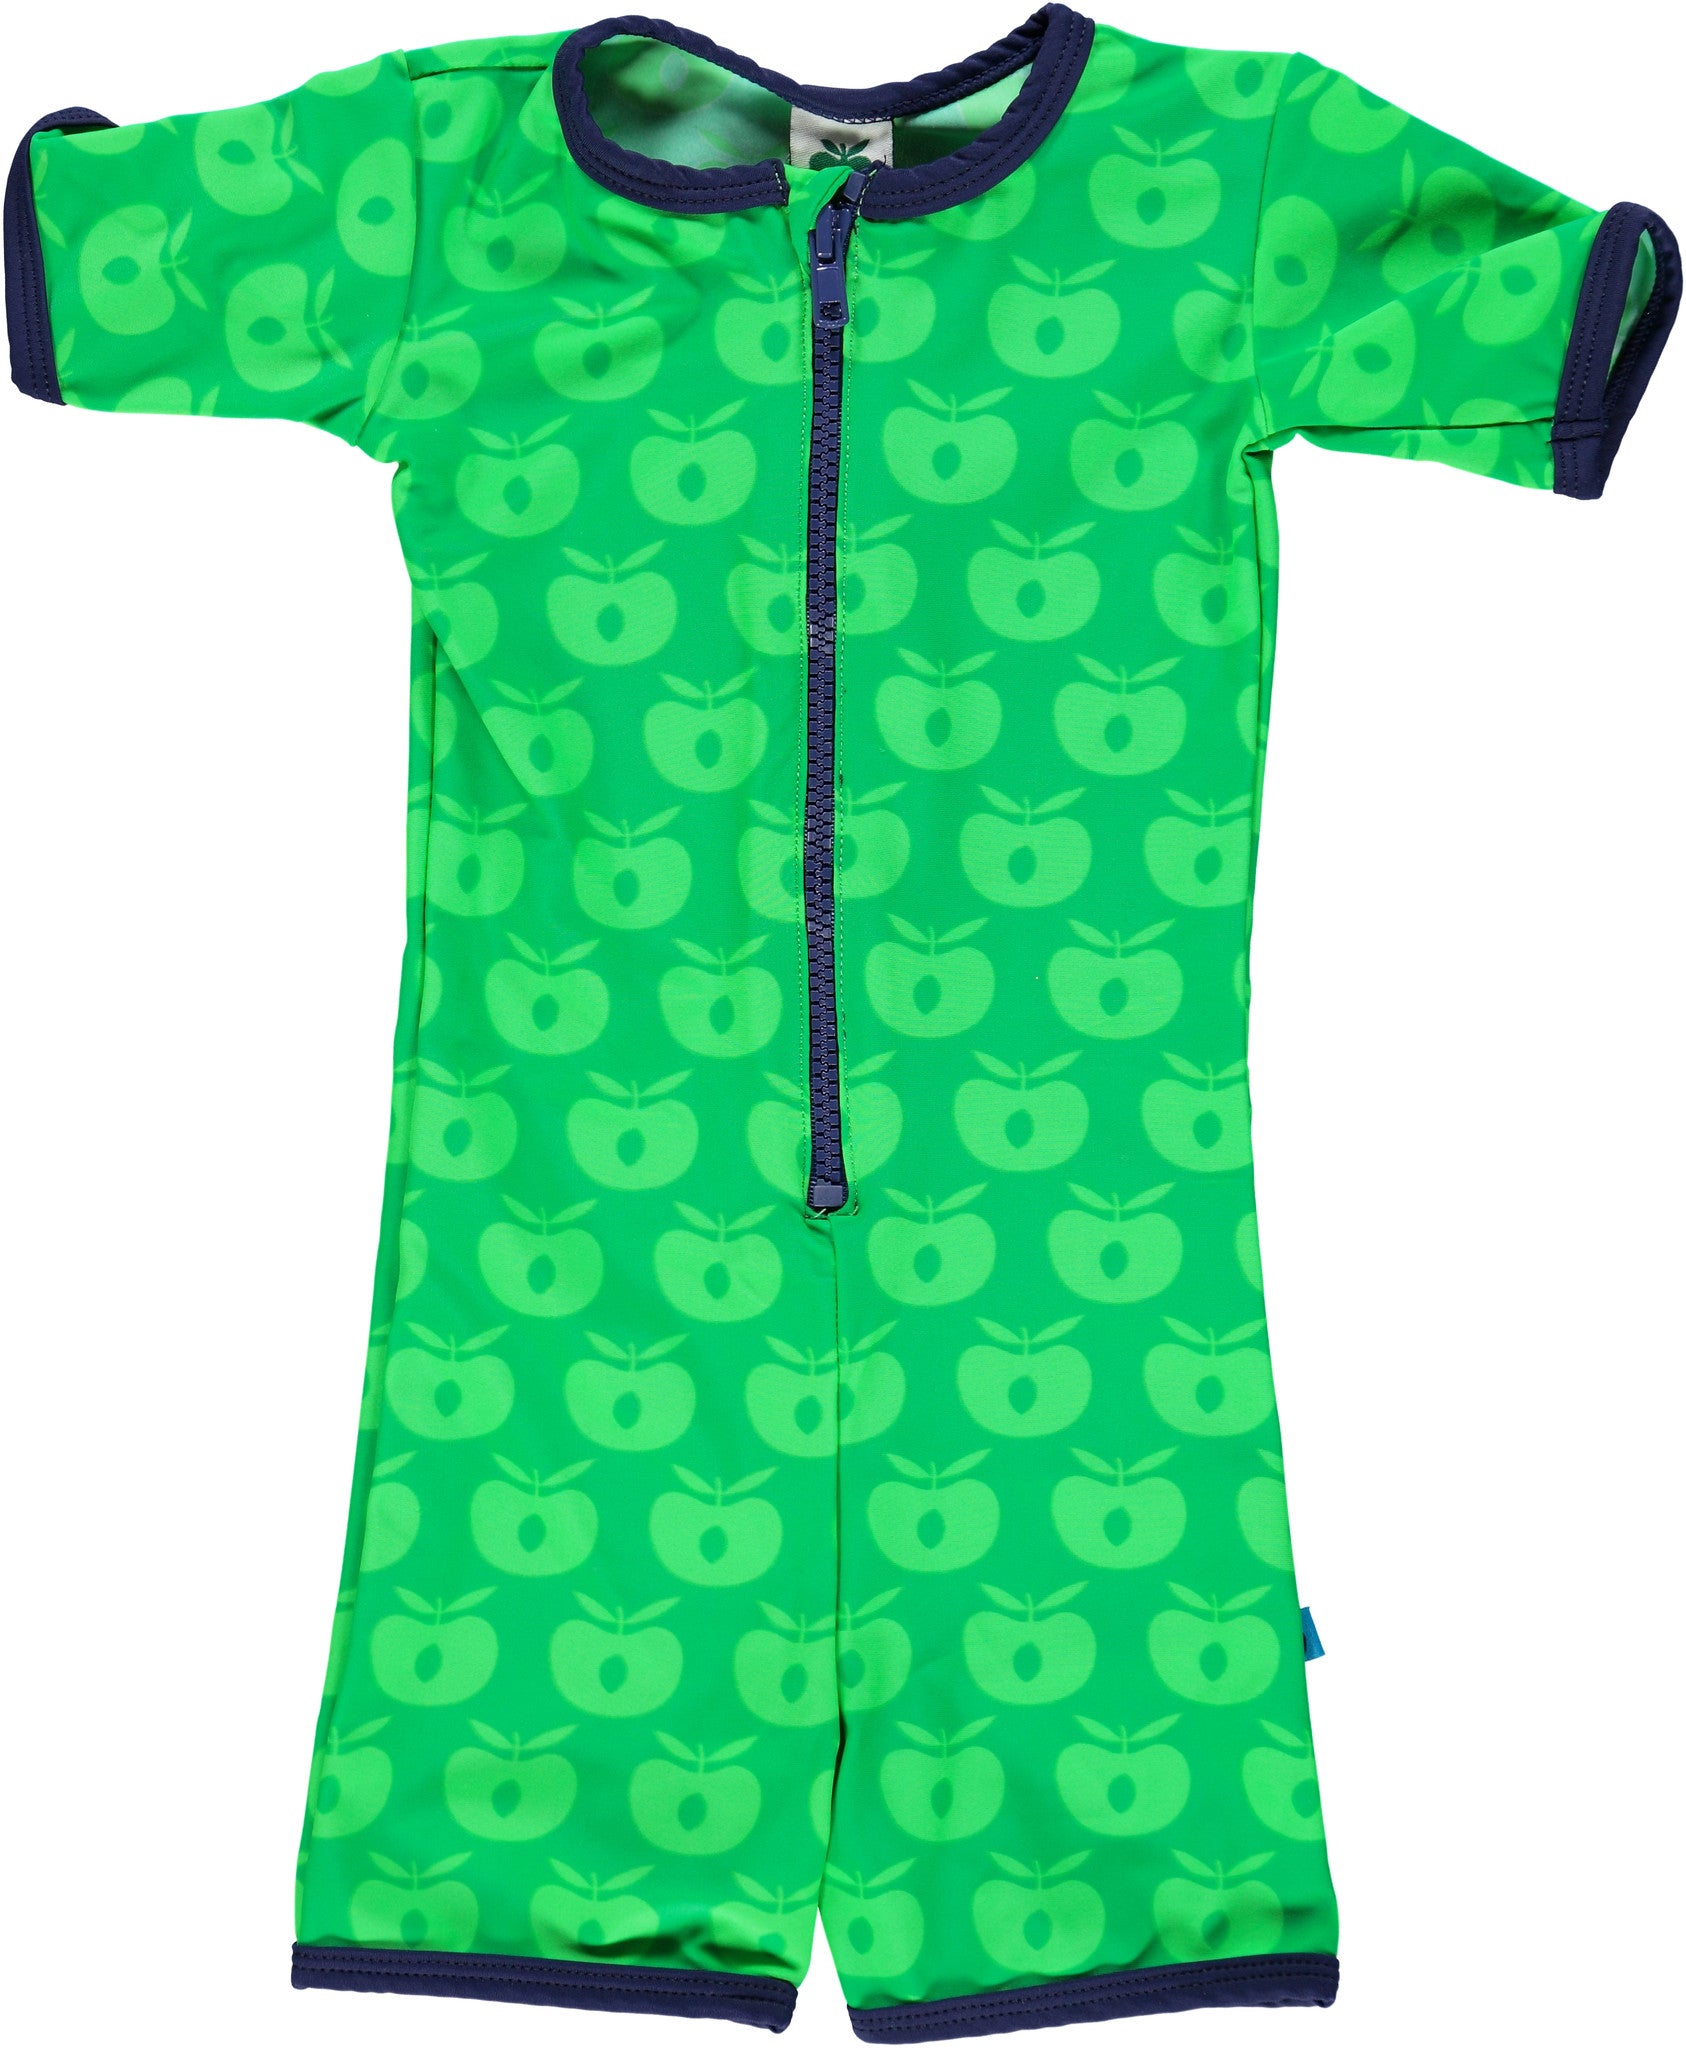 Smafolk - UV-Suit Groen Appels